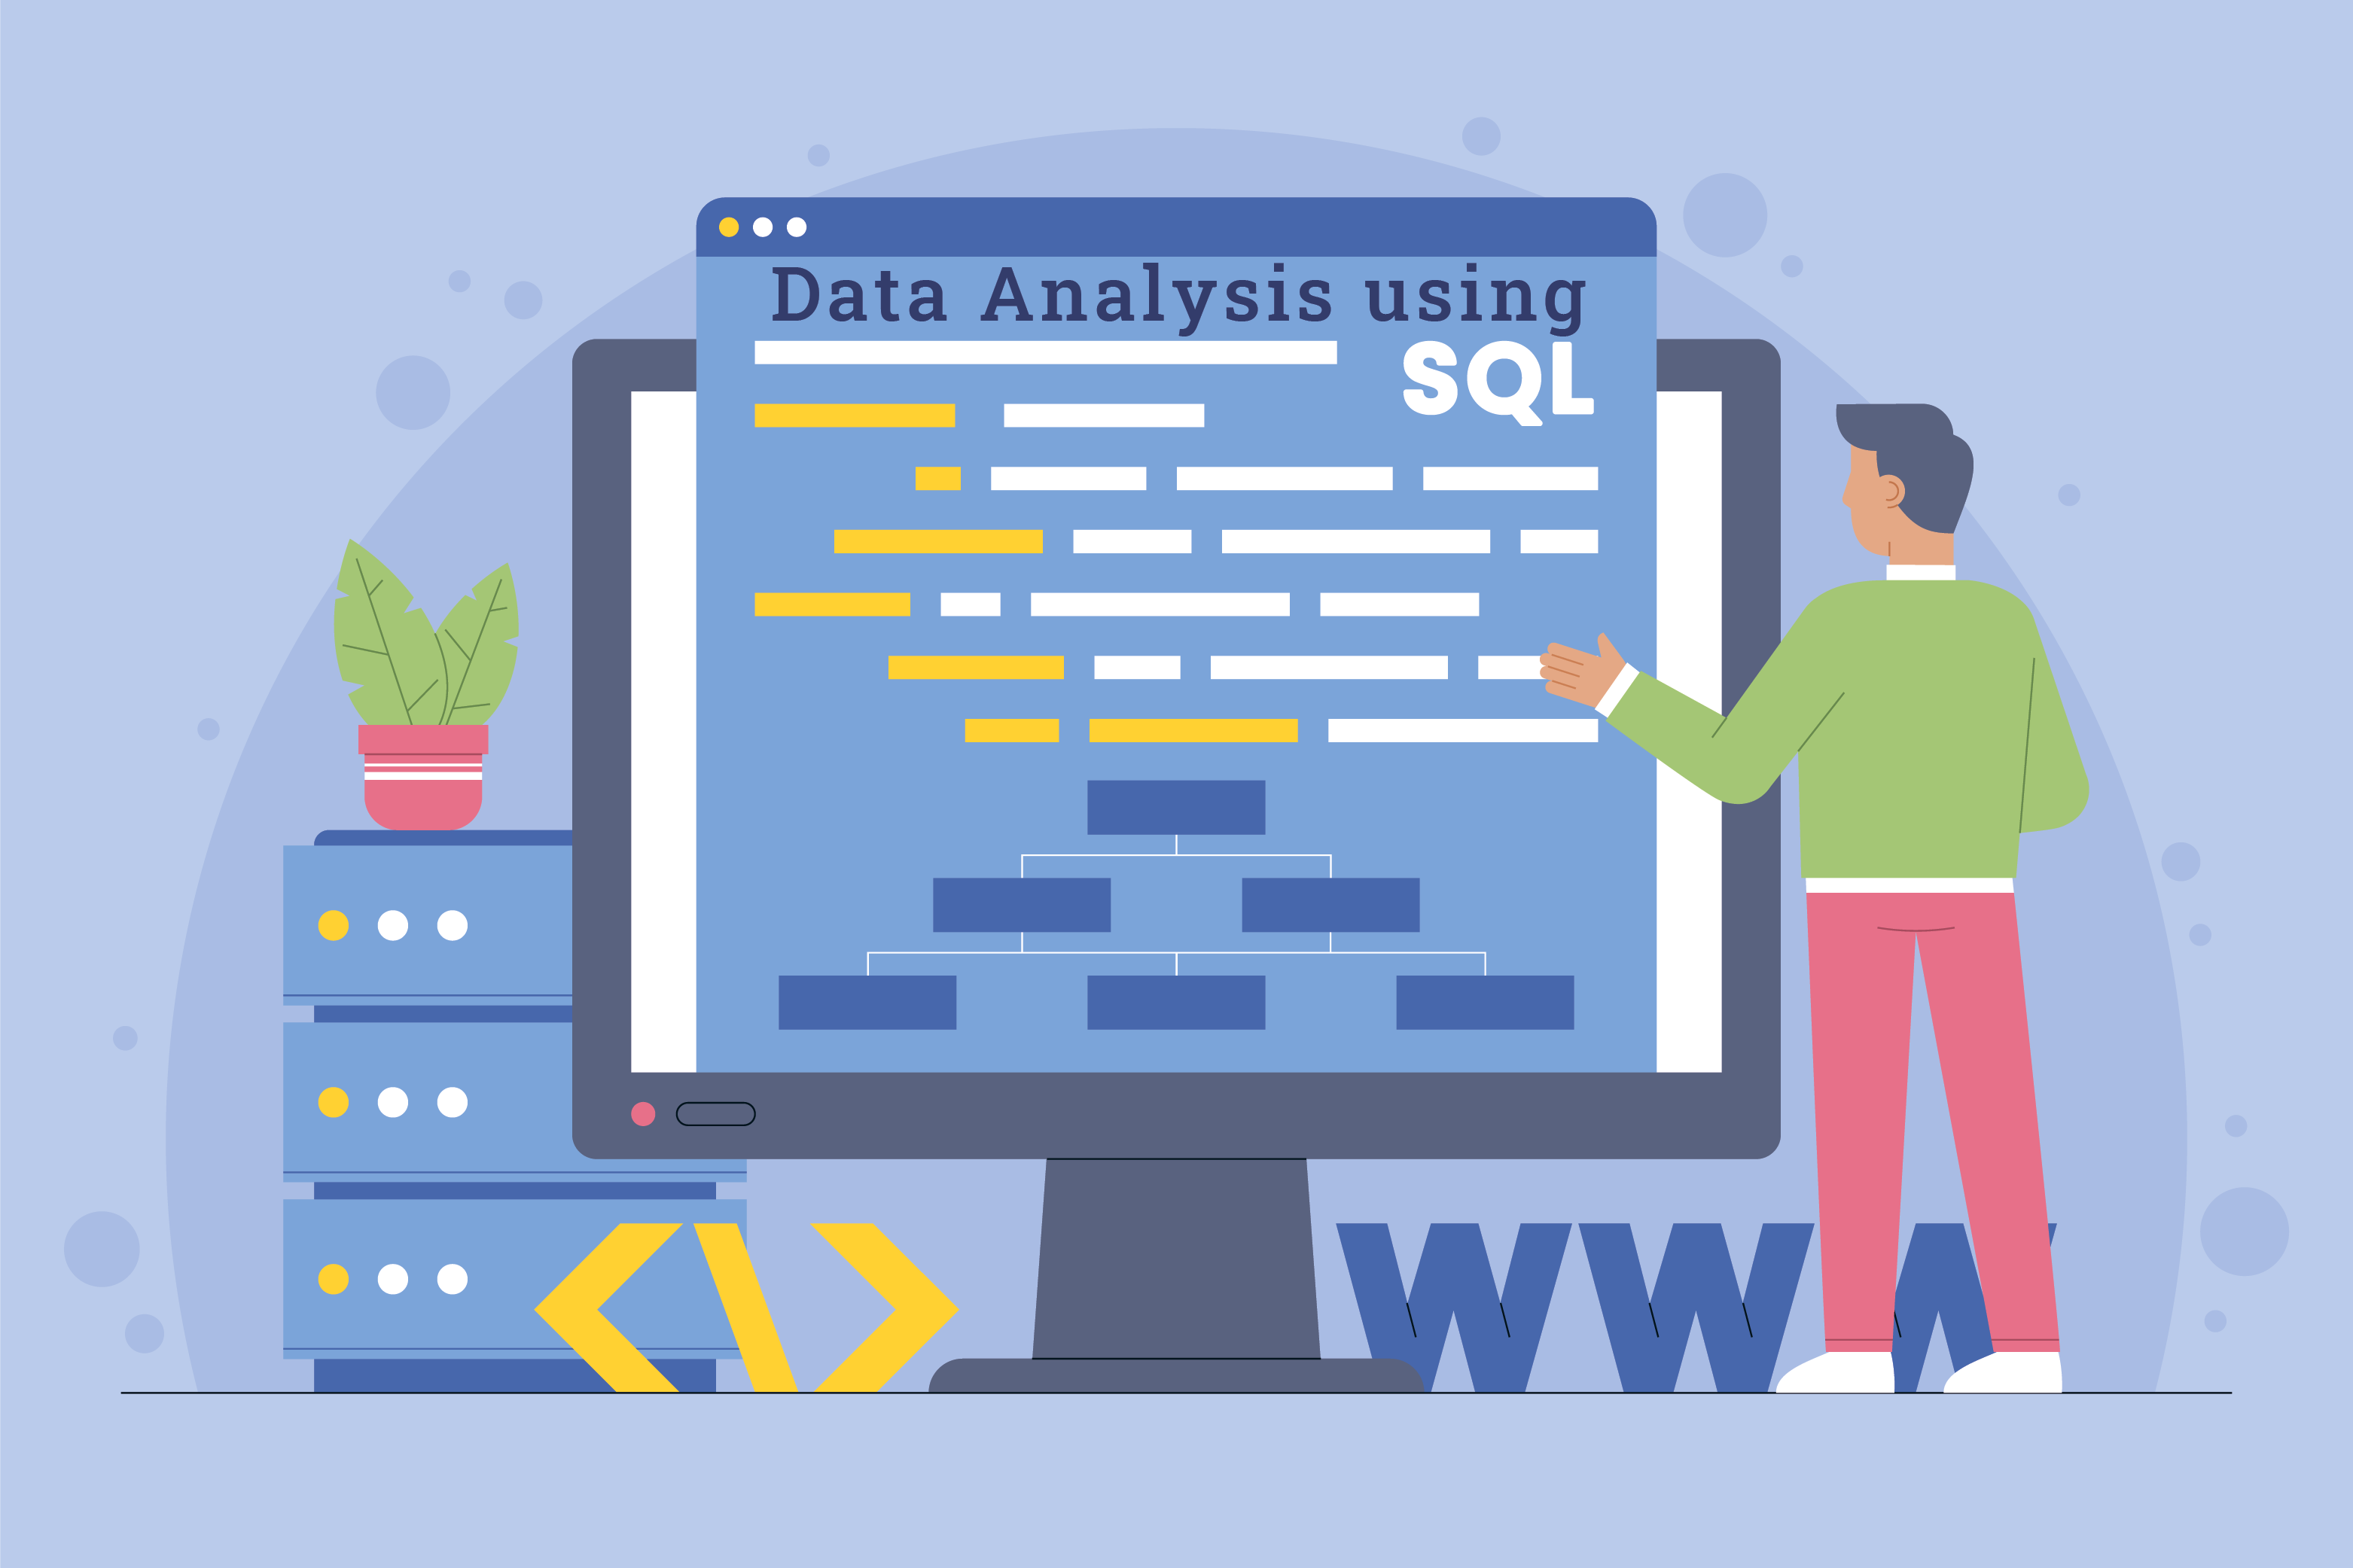 Data Analysis using SQL